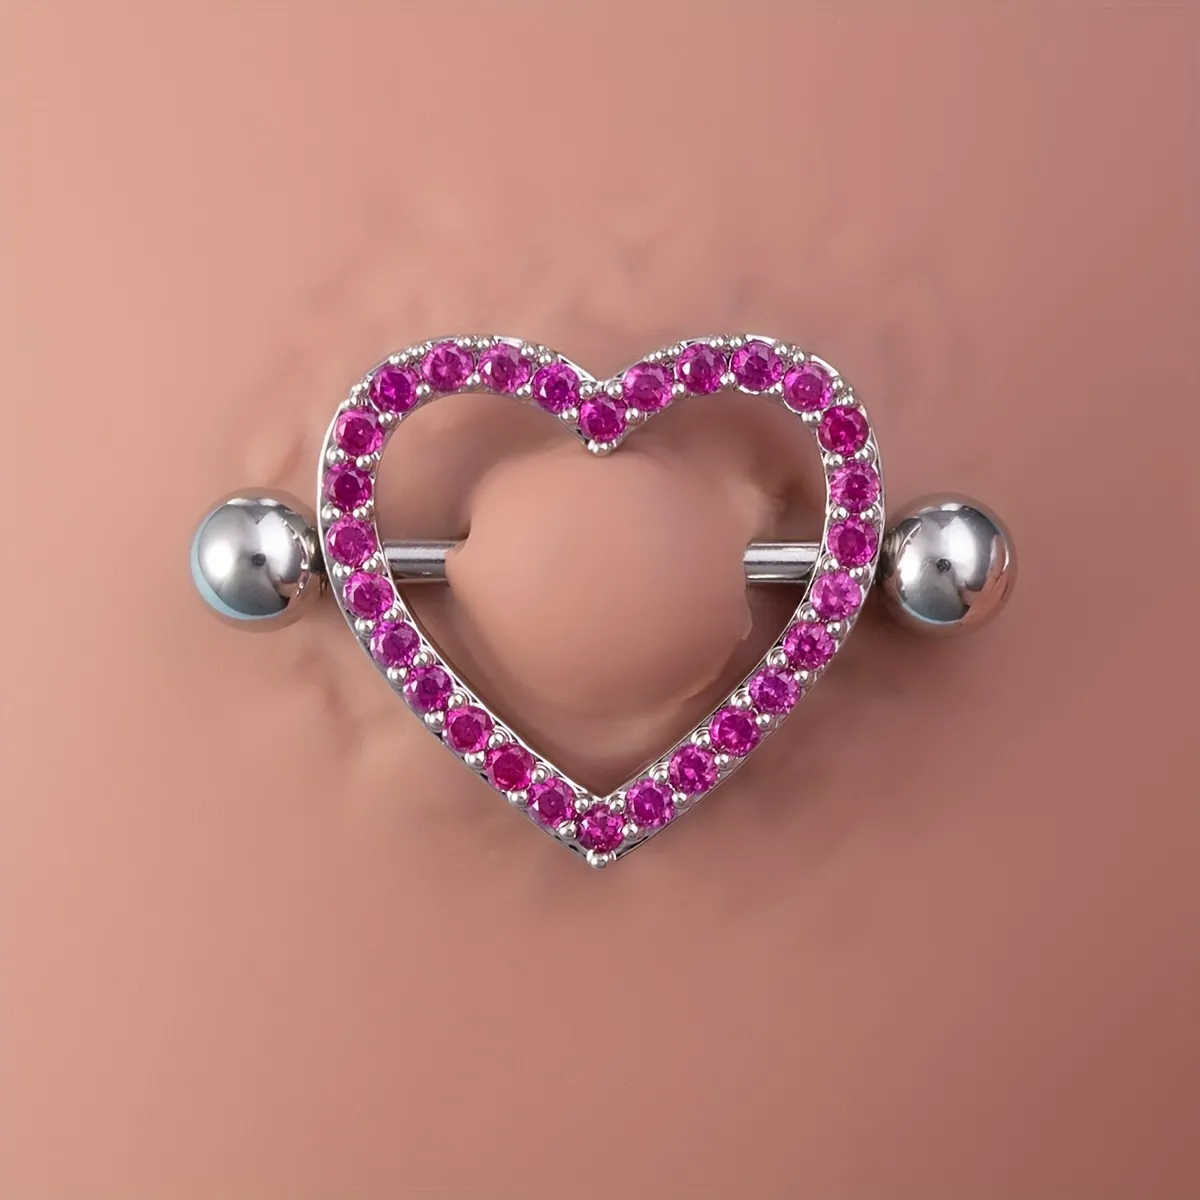 heart nipple piercings on someone